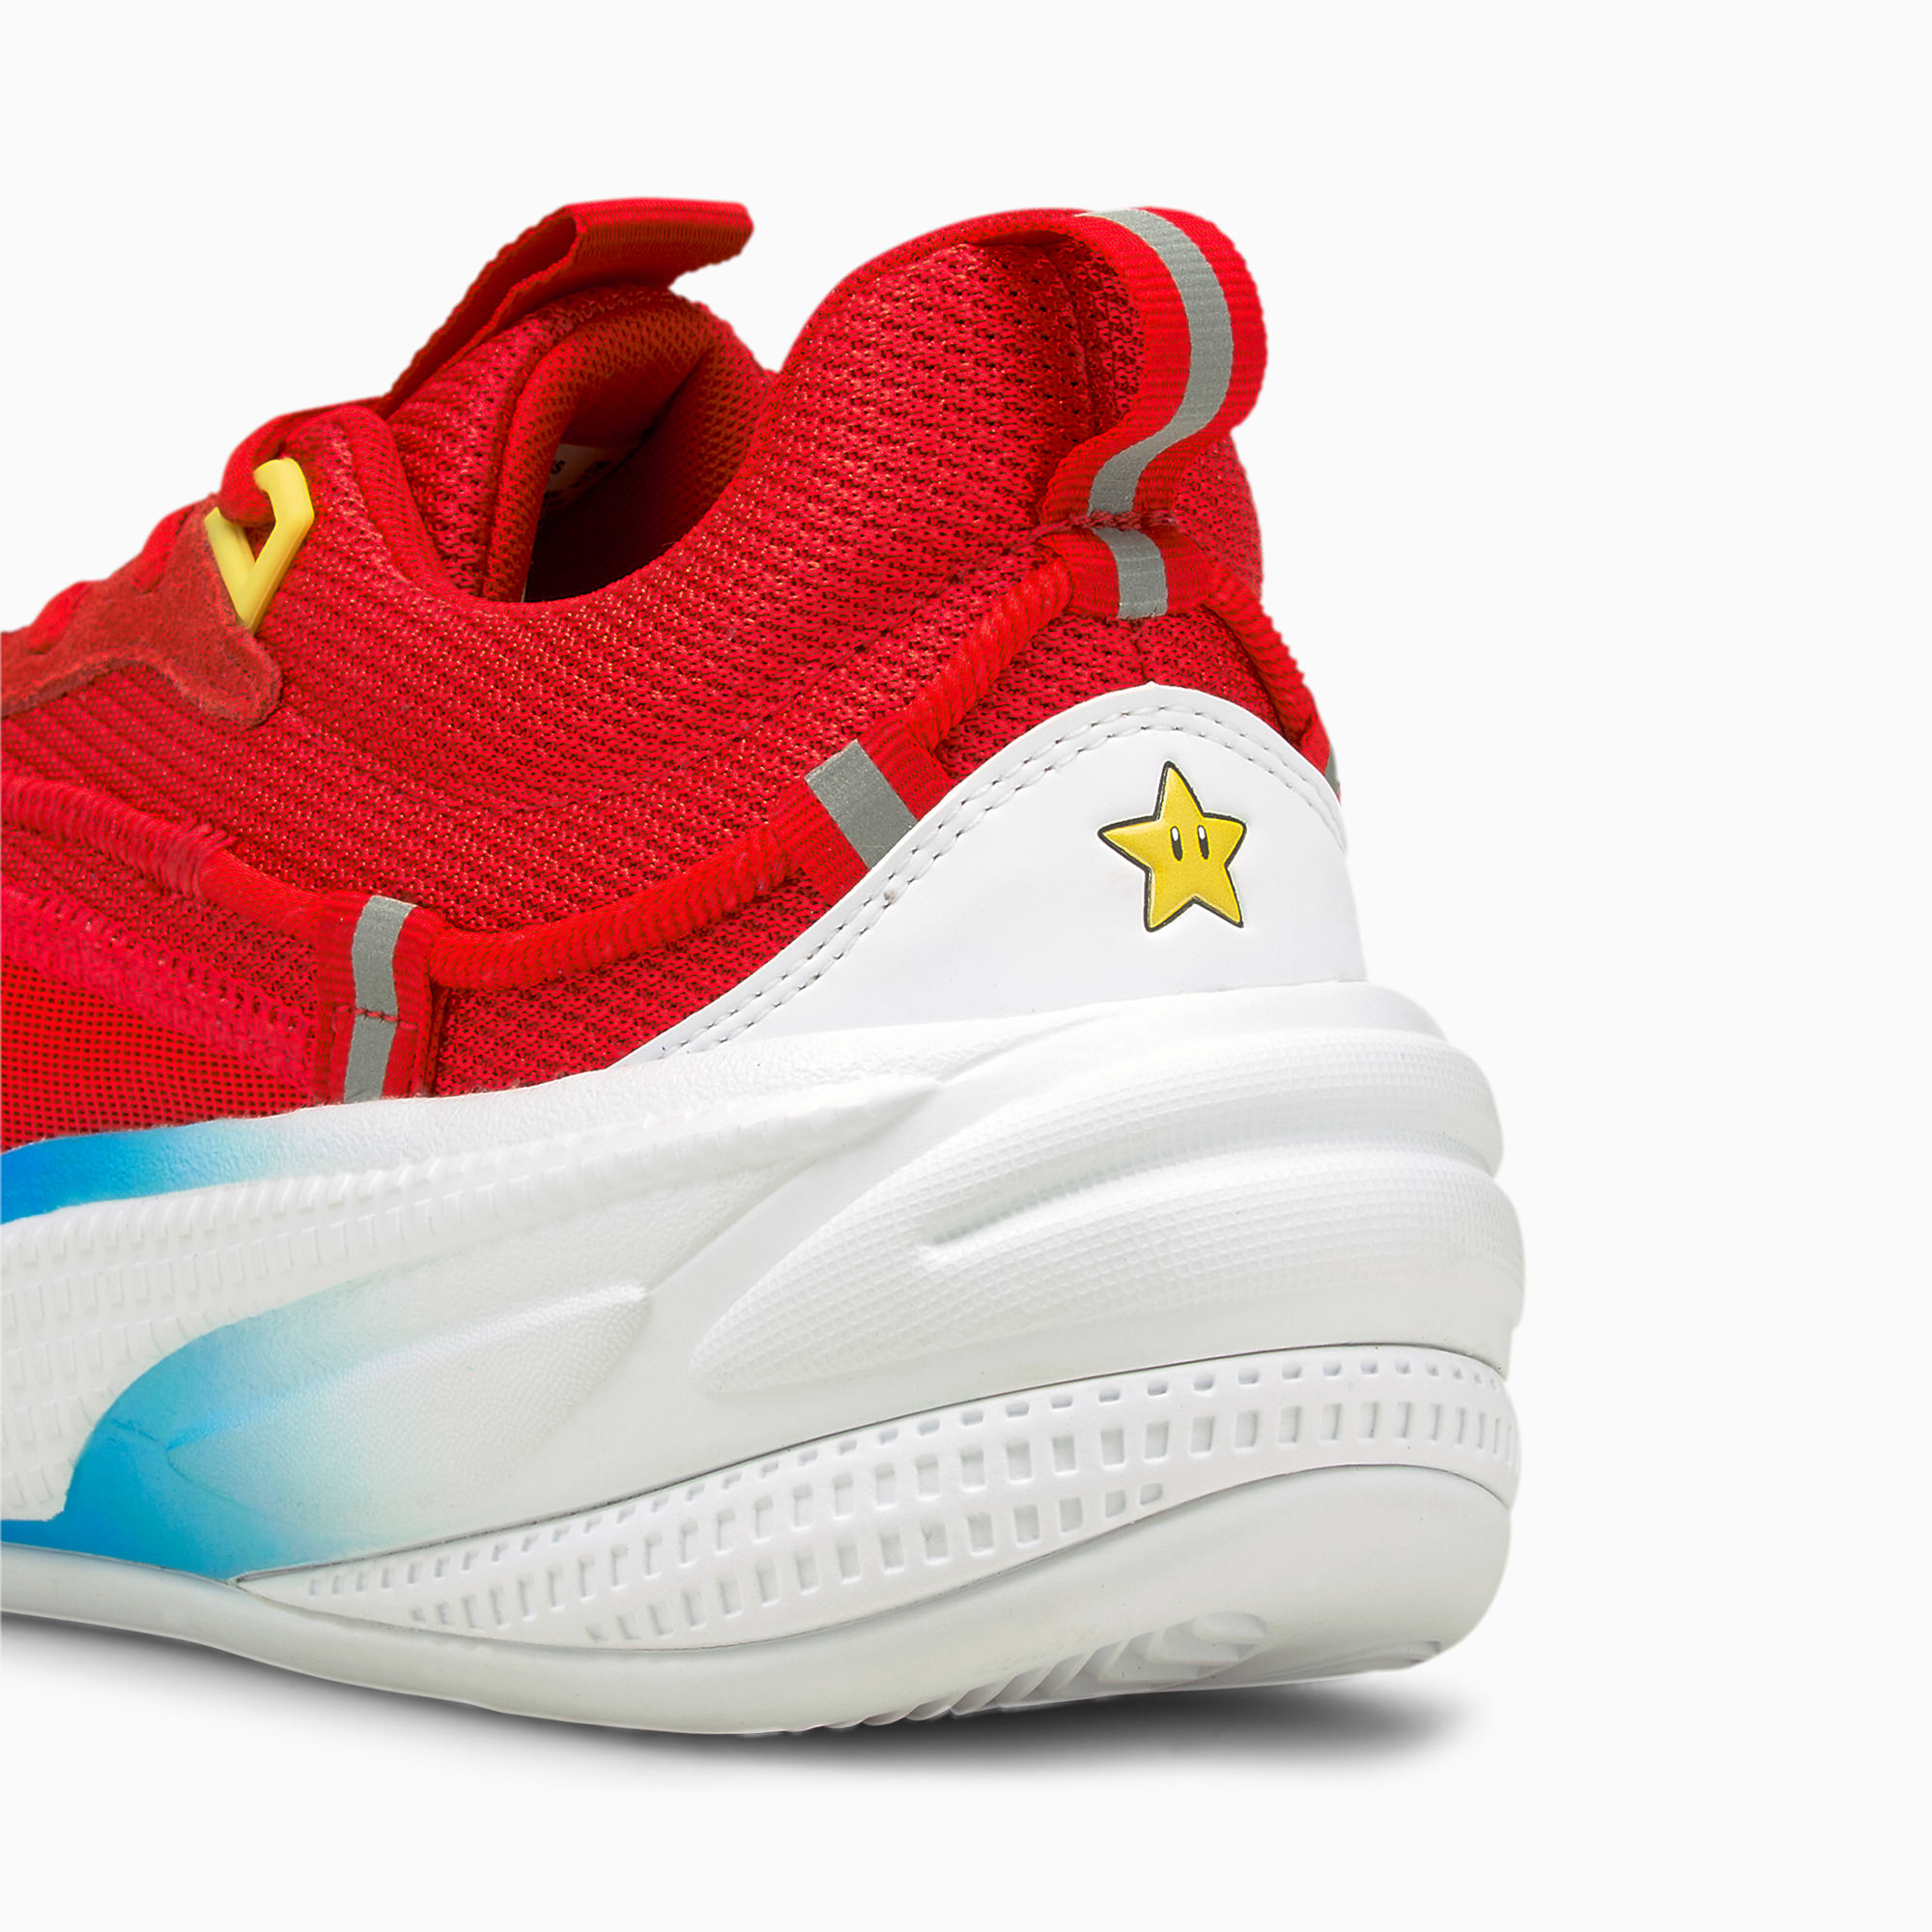 Puma looks set to release Super Mario 35th anniversary footwear | VGC